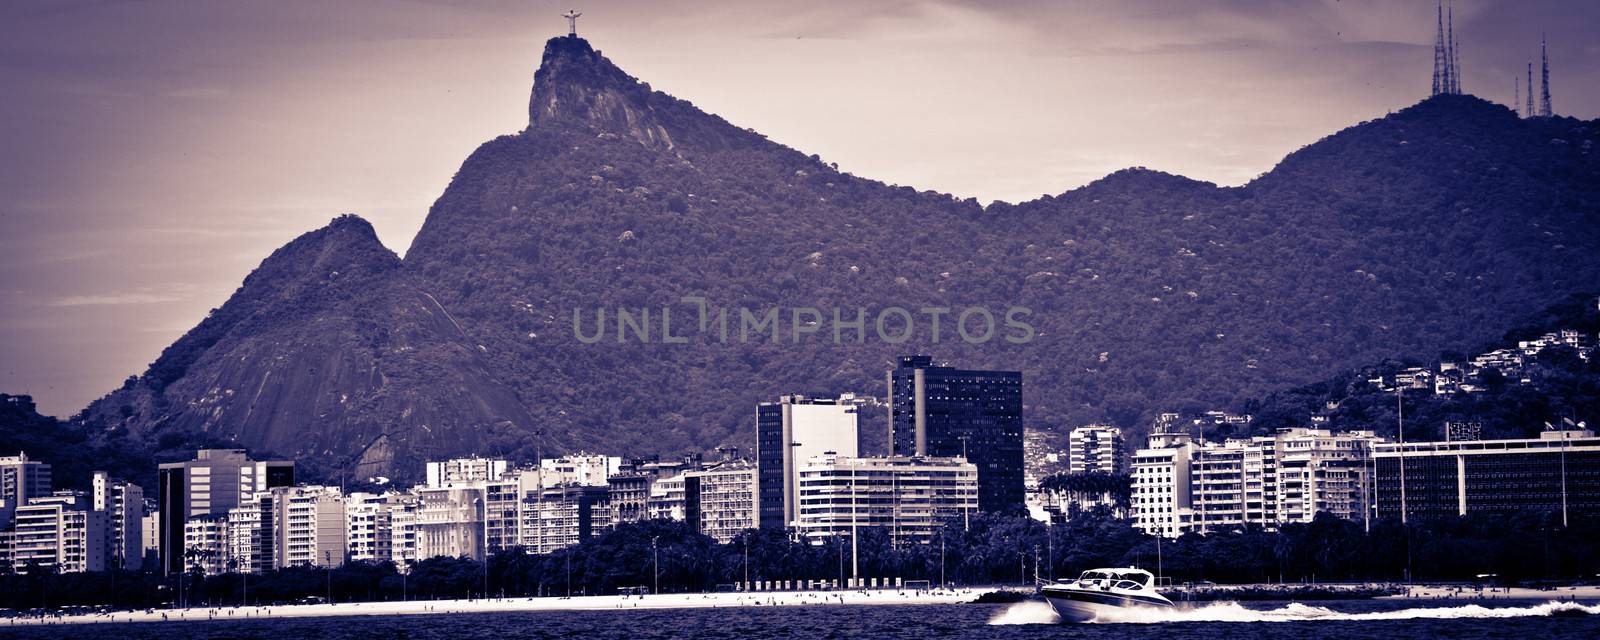 Rio de Janeiro cityscape by CelsoDiniz